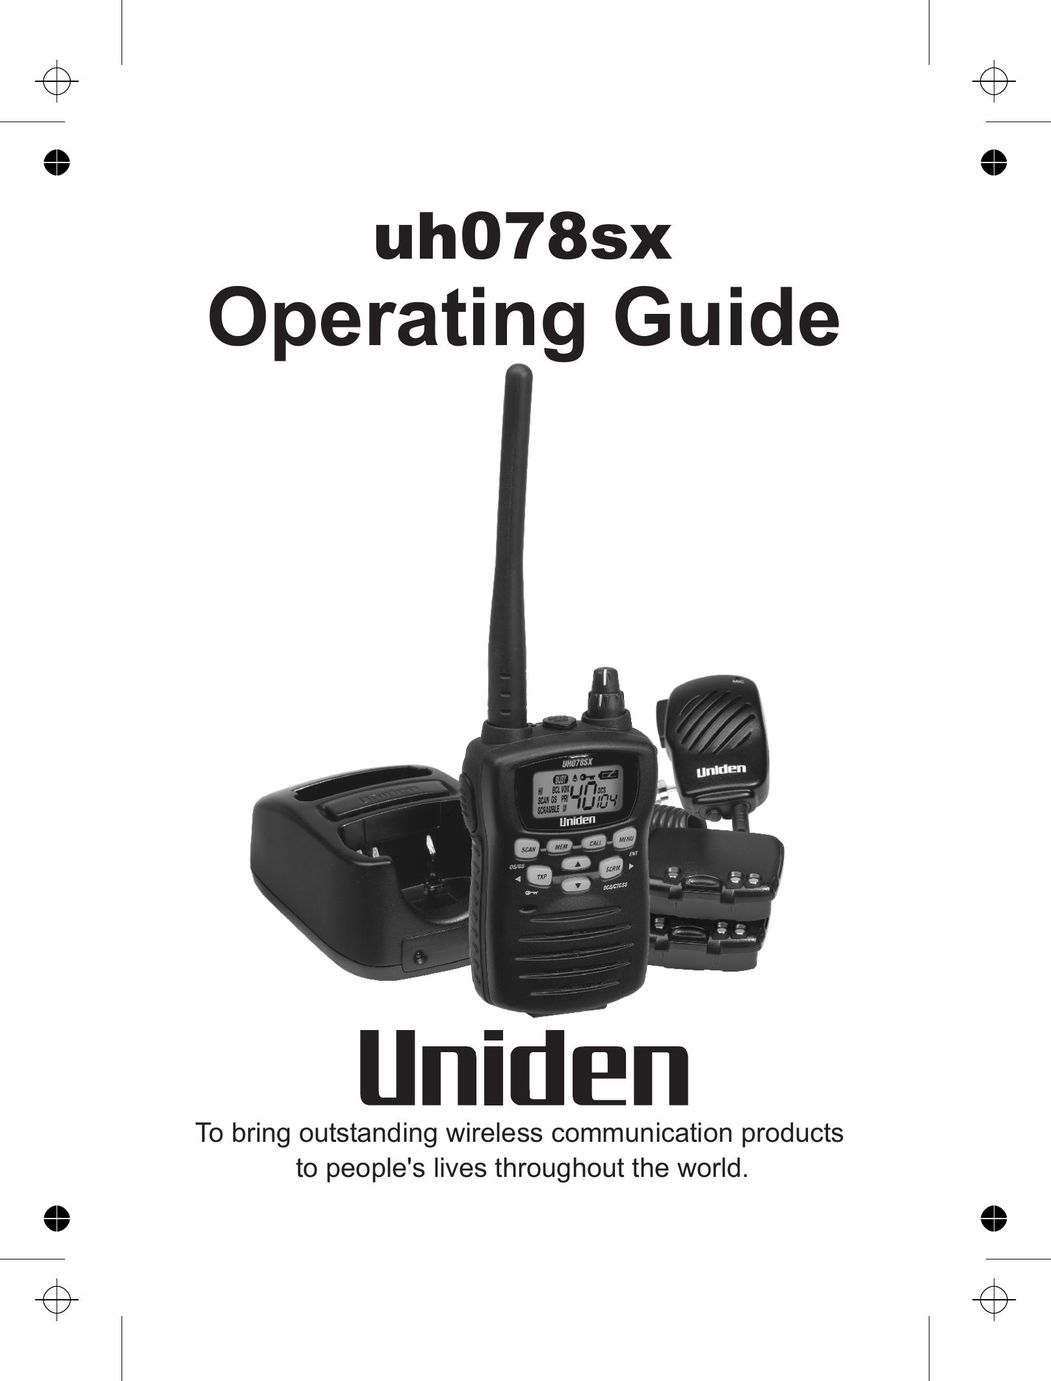 Uniden uh078sx Portable Radio User Manual